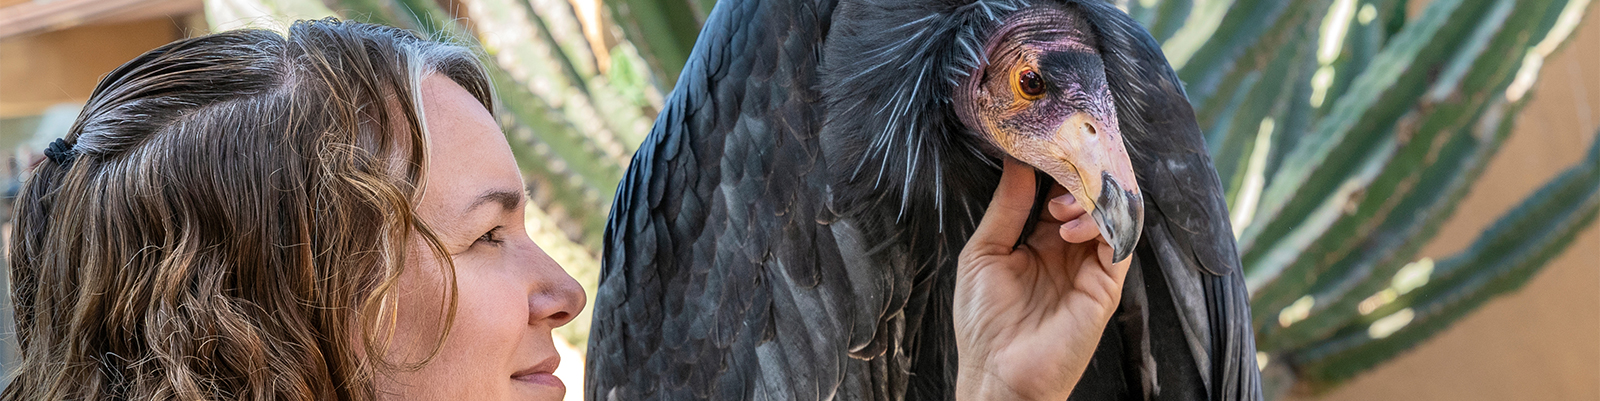 Zoo Keeper with a California Condor